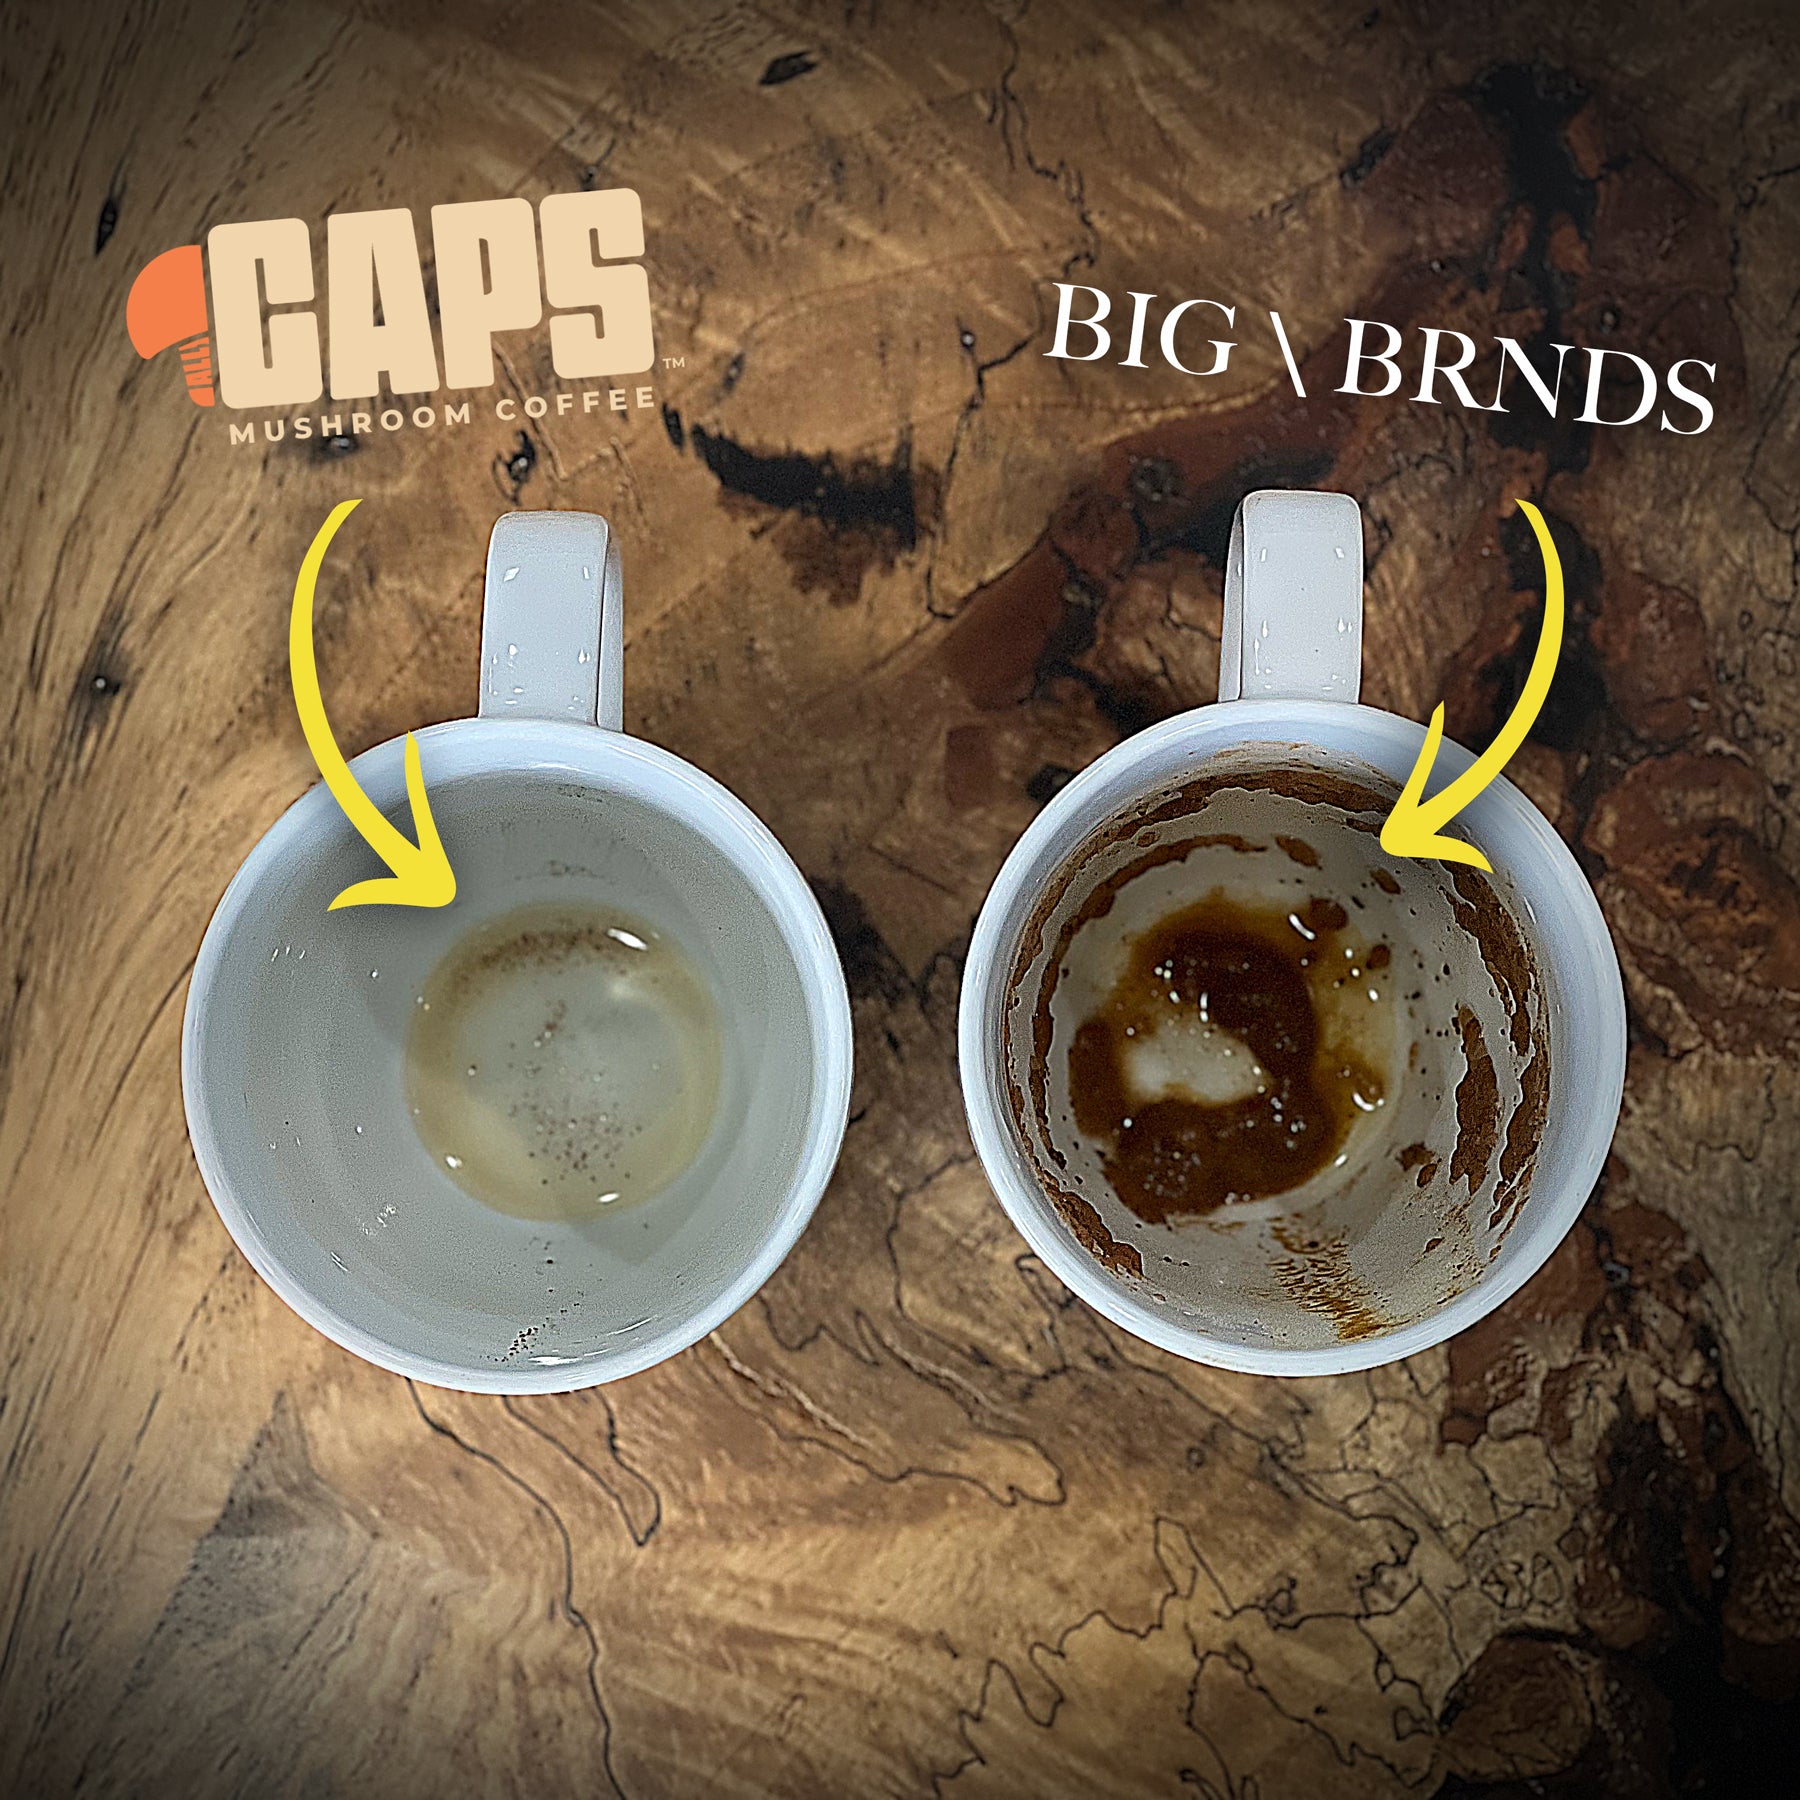 ALL CAPS Dissolves Fully versus Big Brand Mushroom Coffee